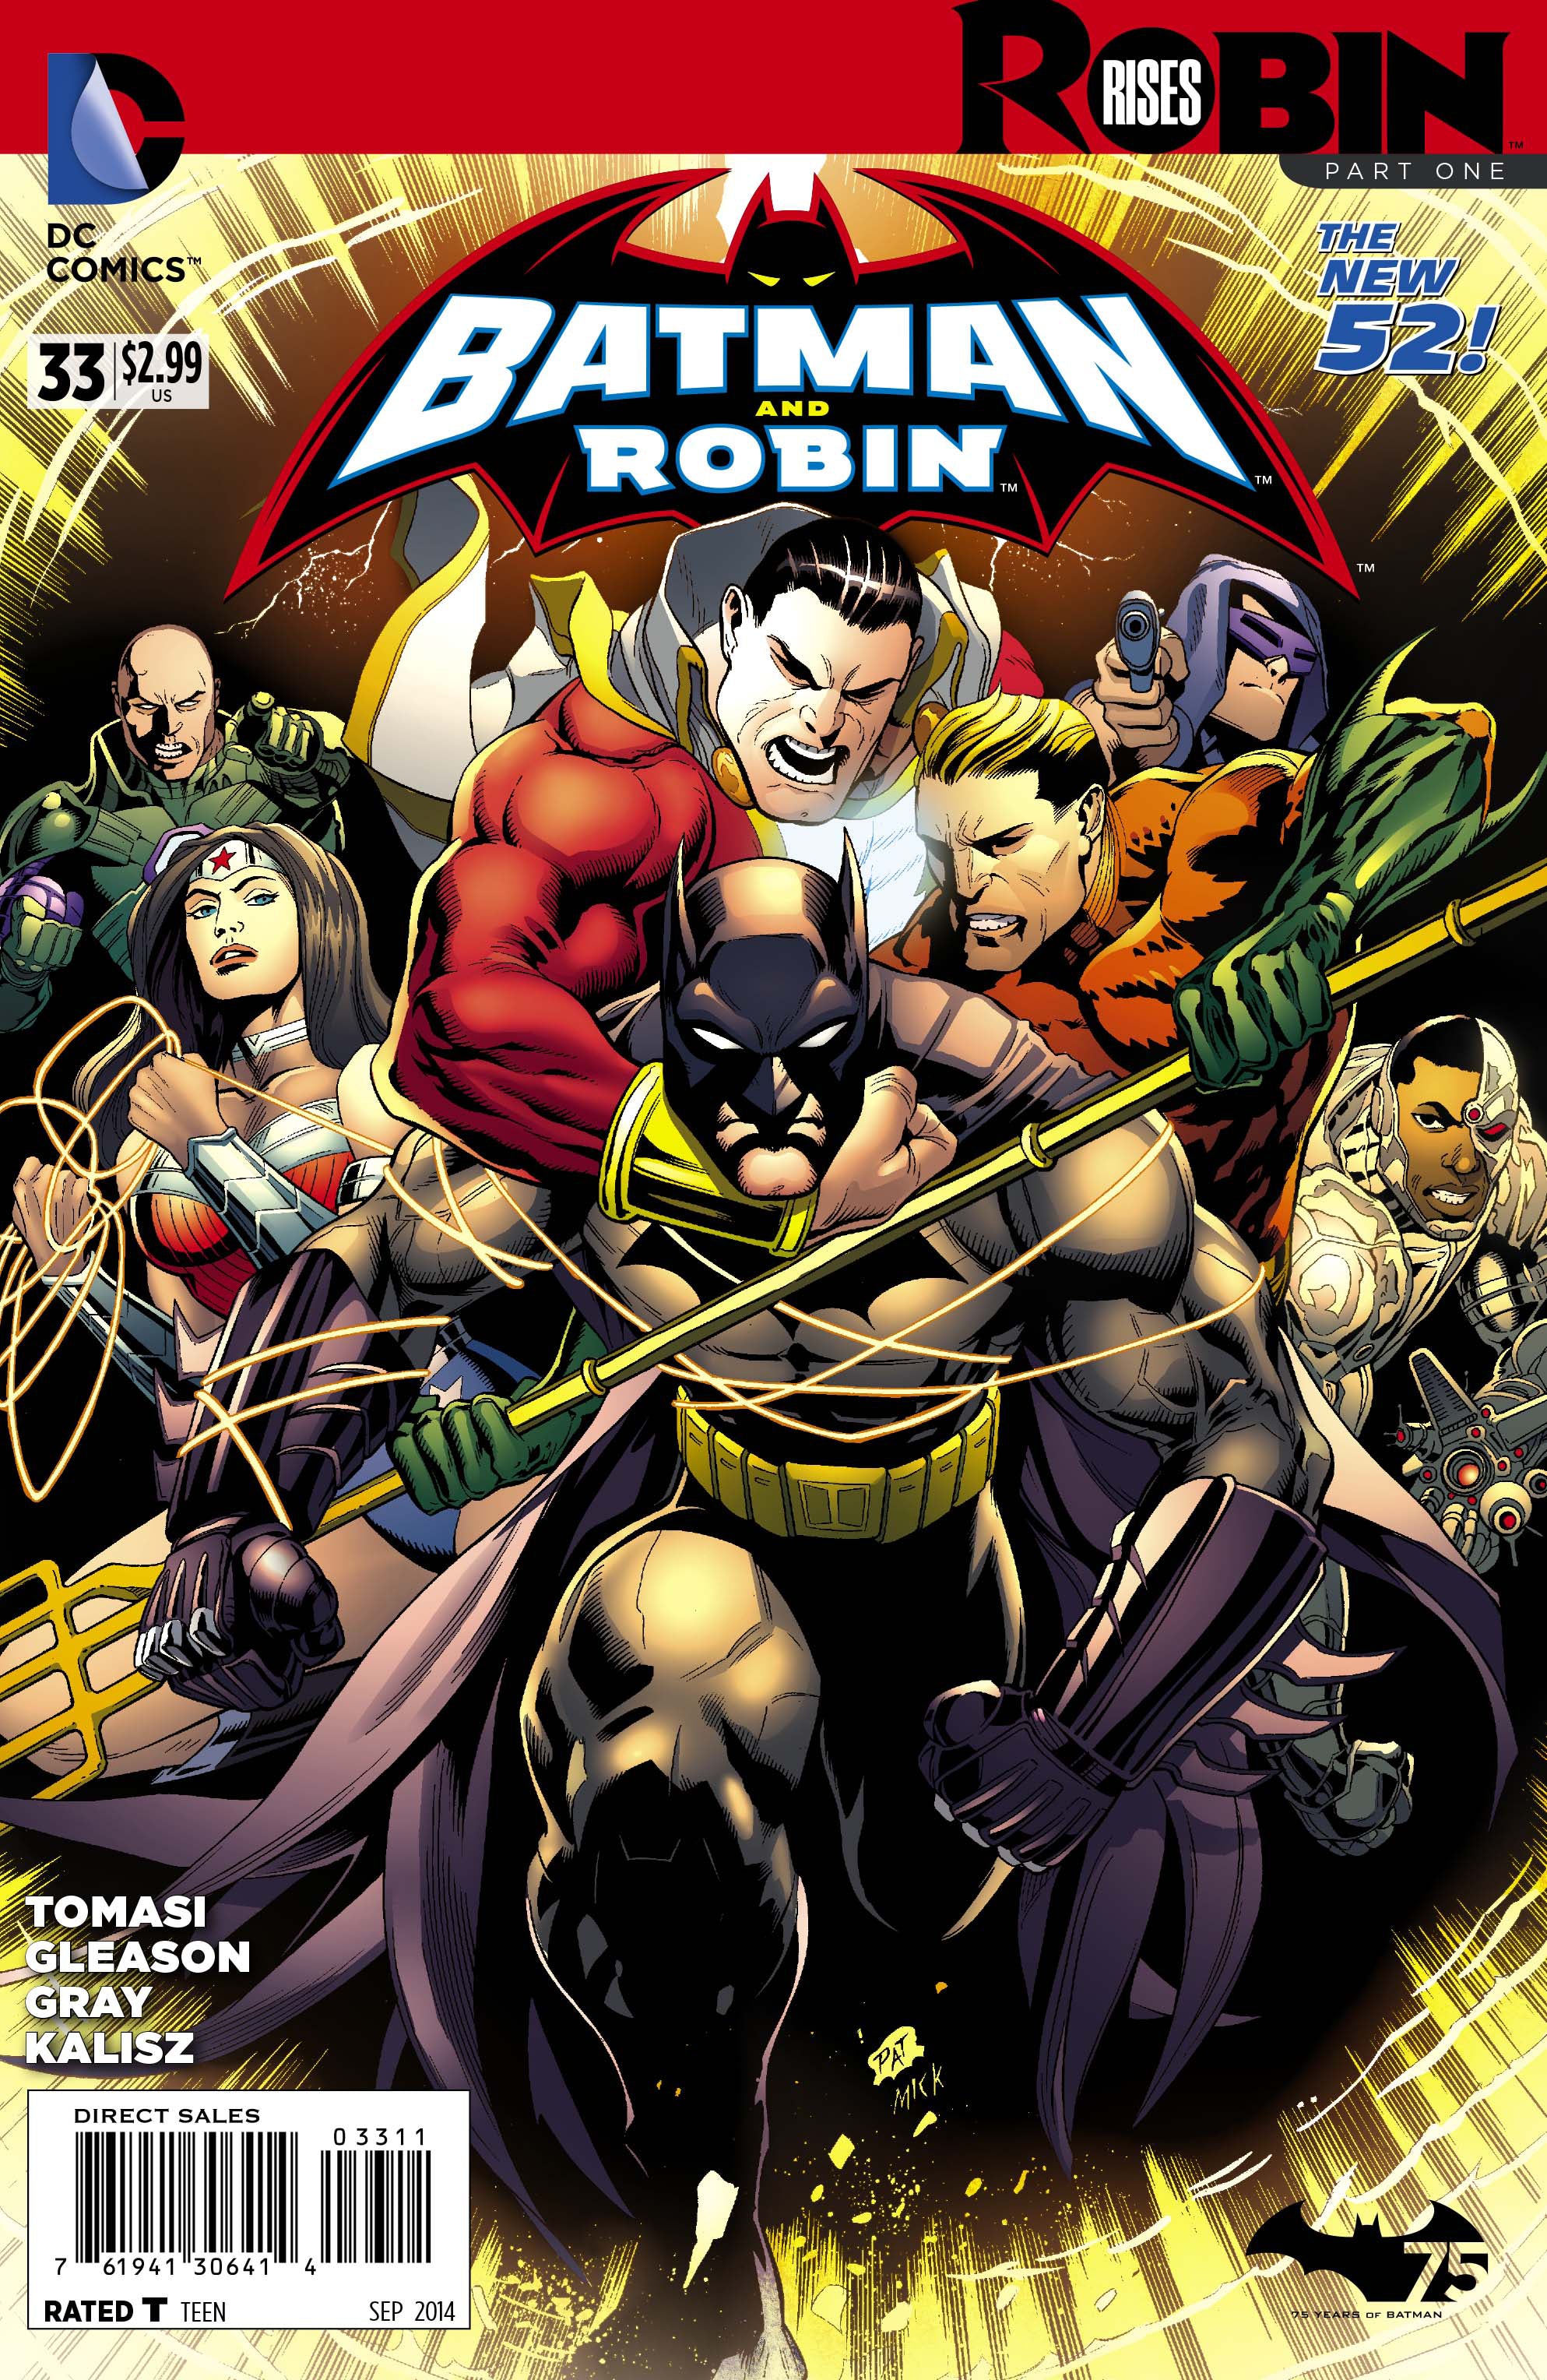 BATMAN AND ROBIN #33 (ROBIN RISES) | Game Master's Emporium (The New GME)